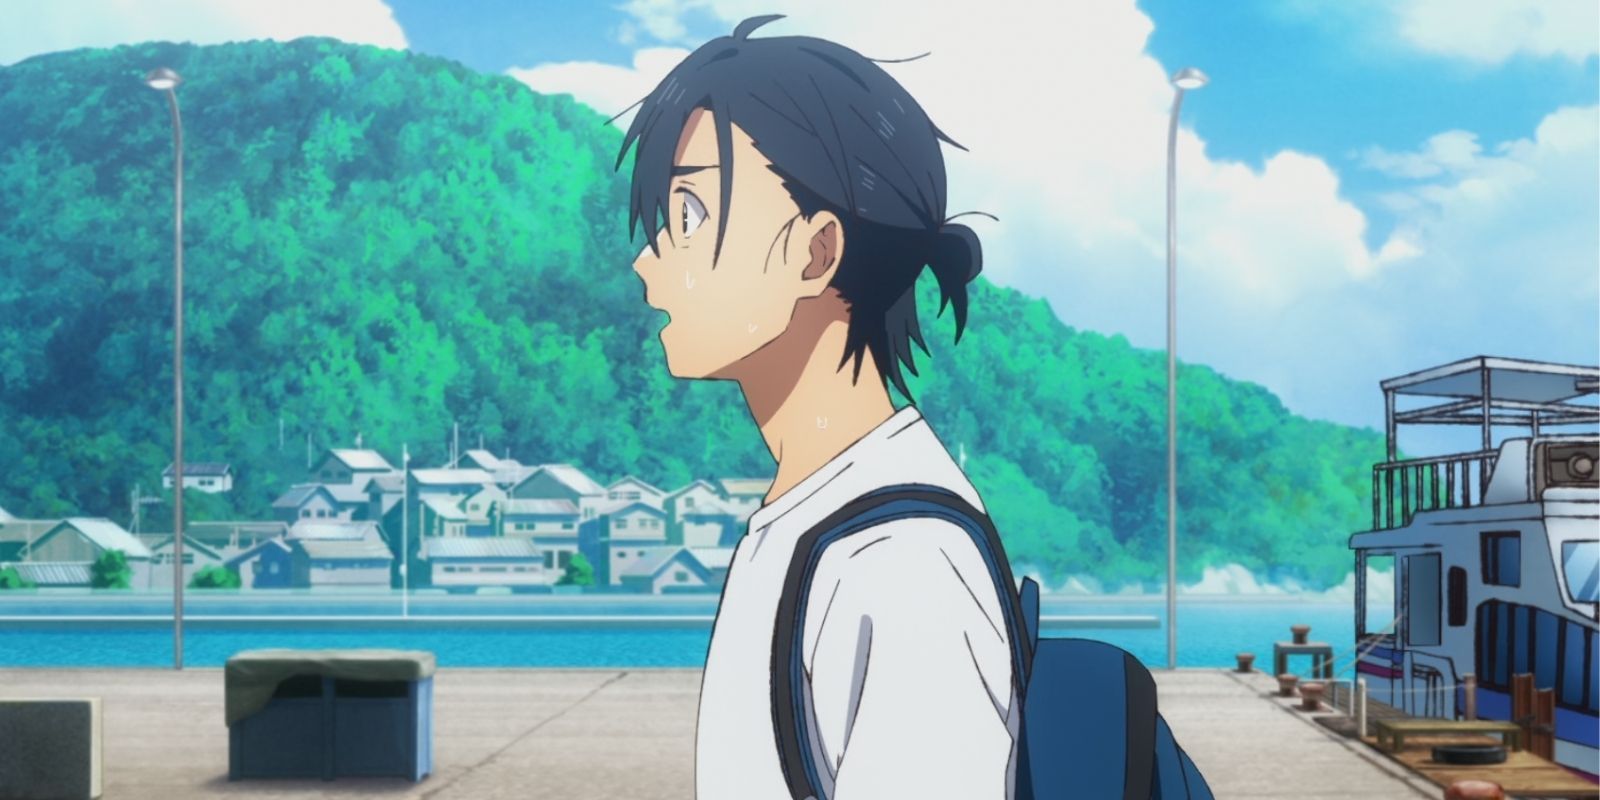 Shinpei looking shocked in Episode 2 of Summer Time Rendering